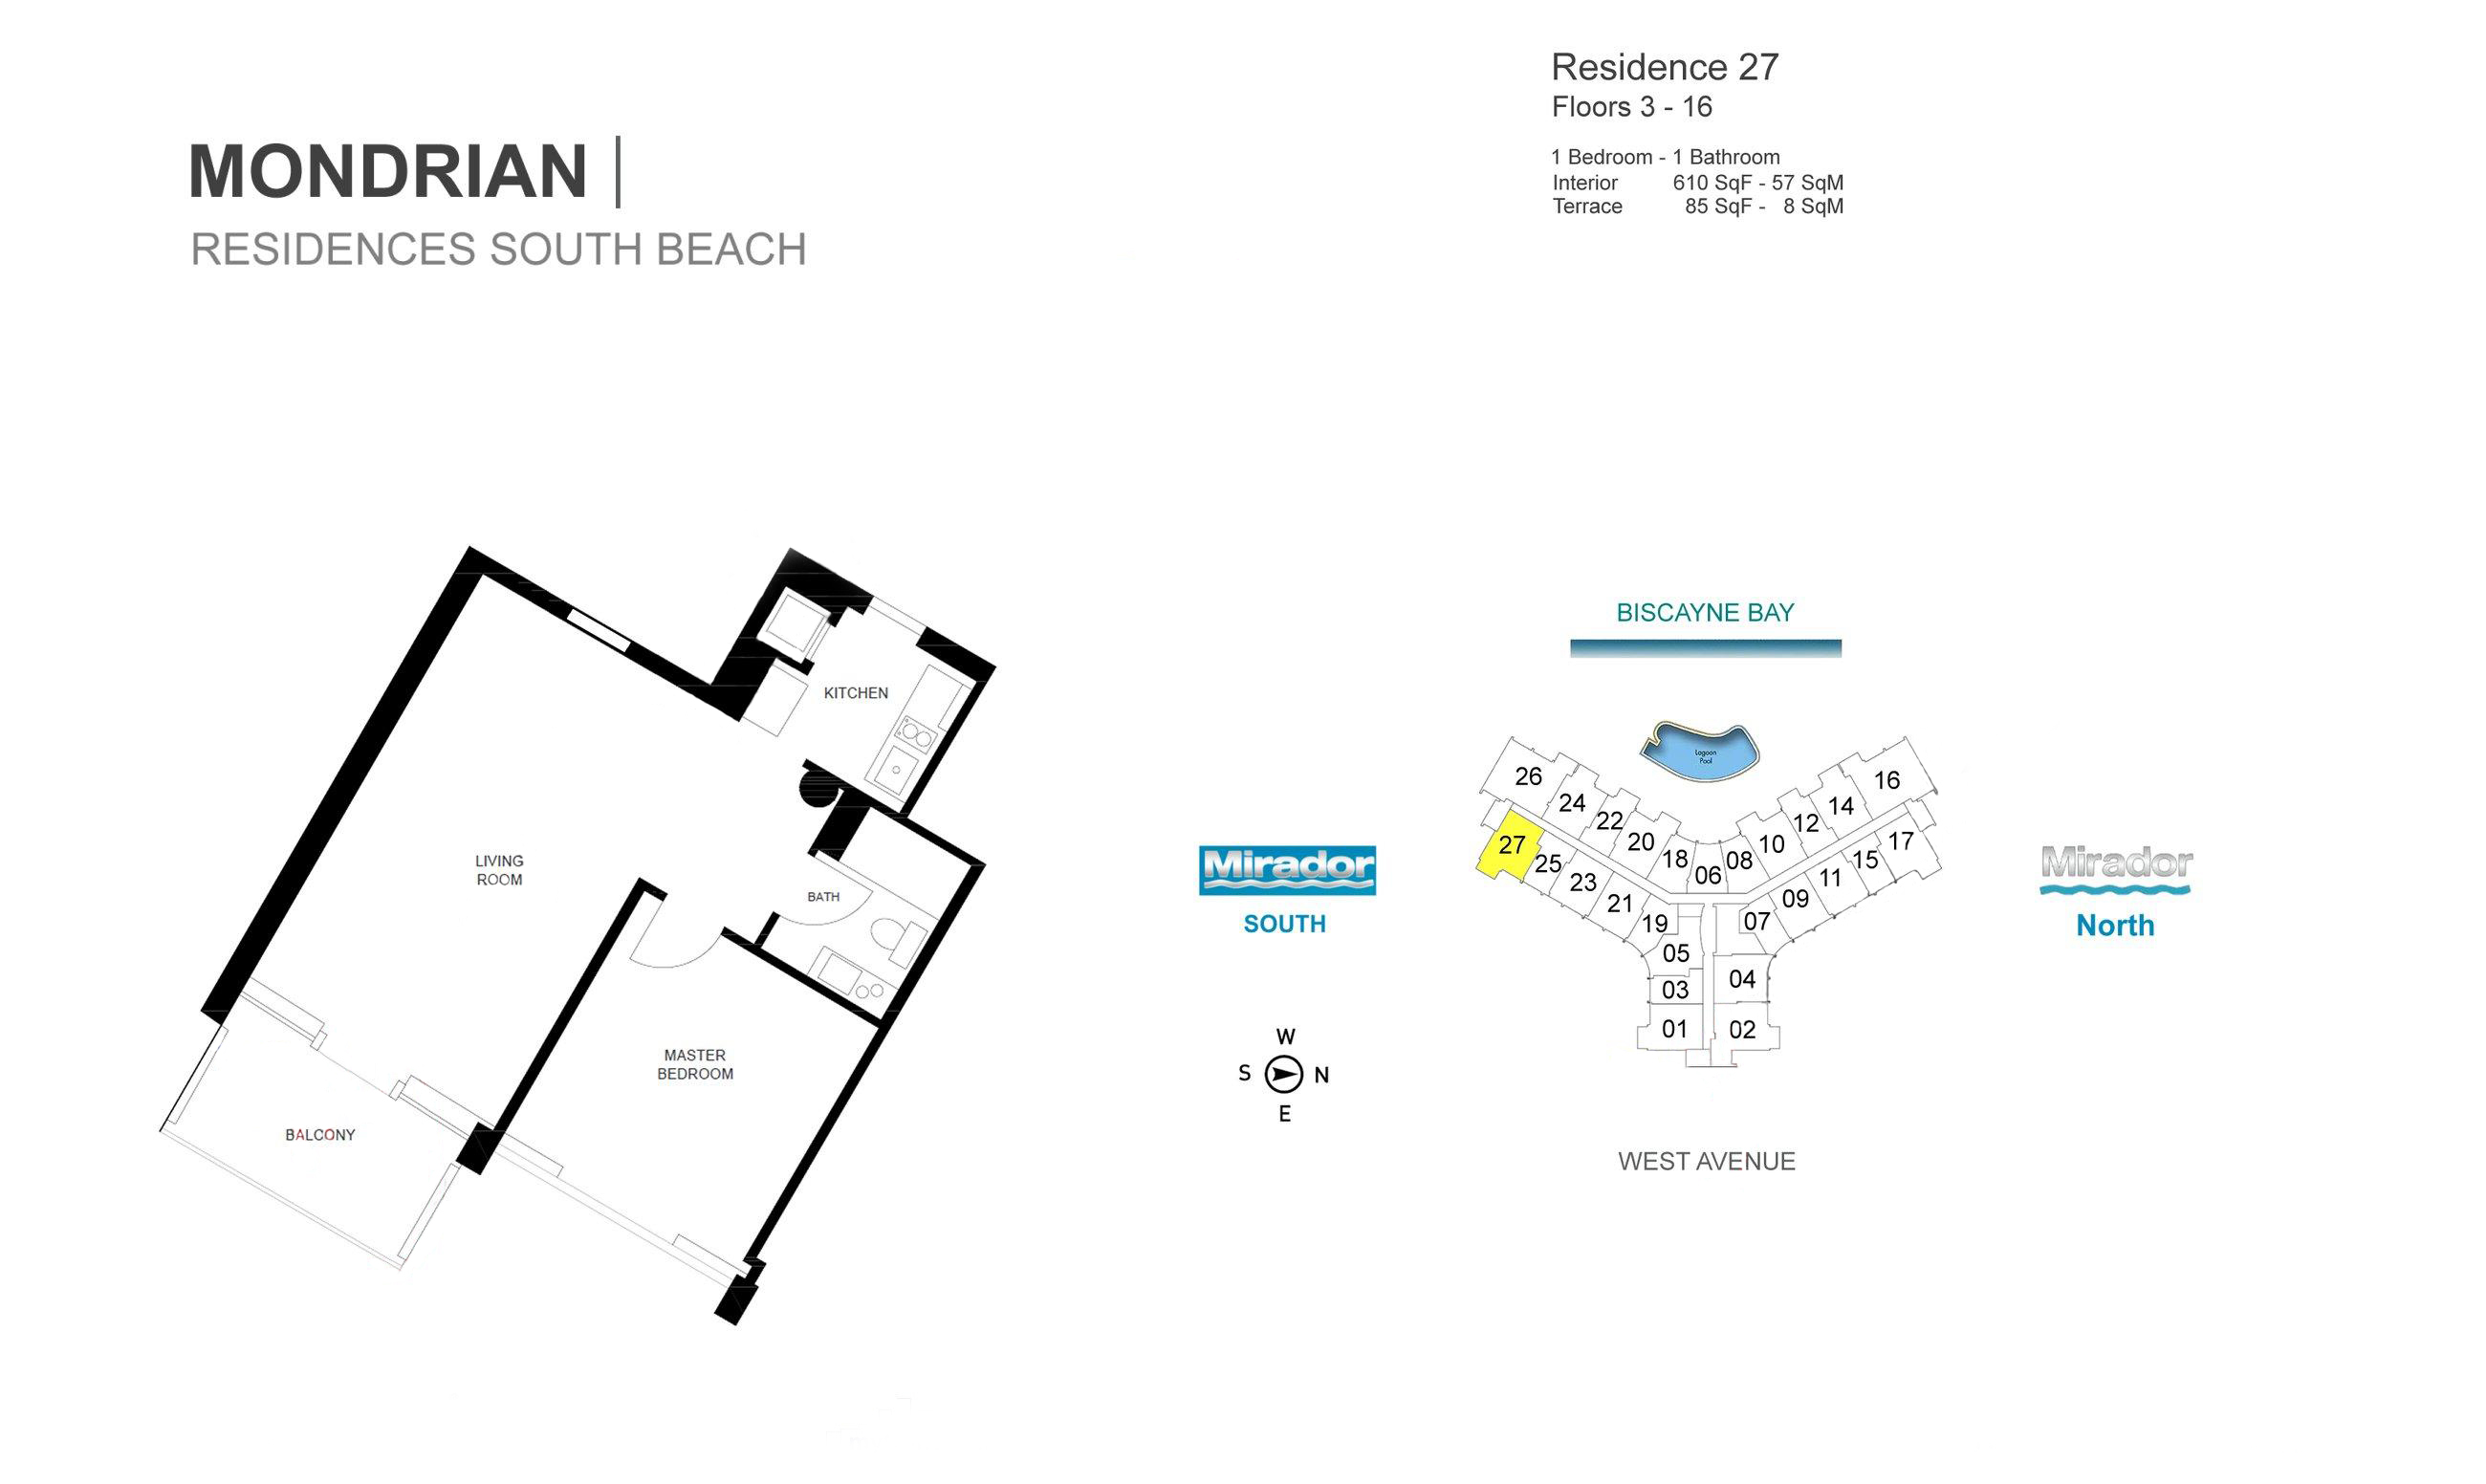 Mondrian South Beach Residence 27